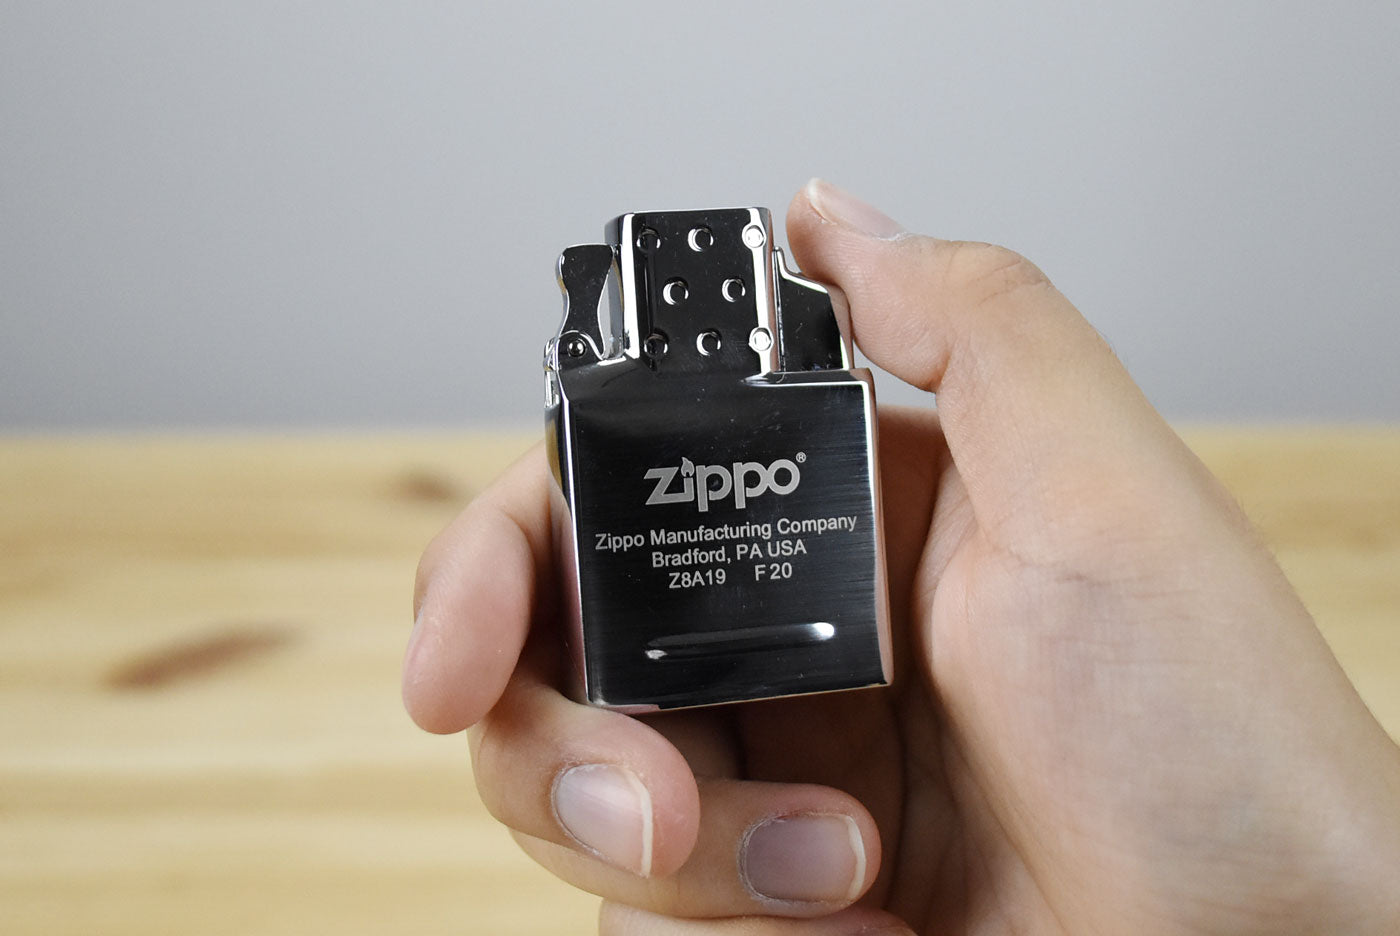 Zippo Accessory Butane Lighter Insert - Single Torch